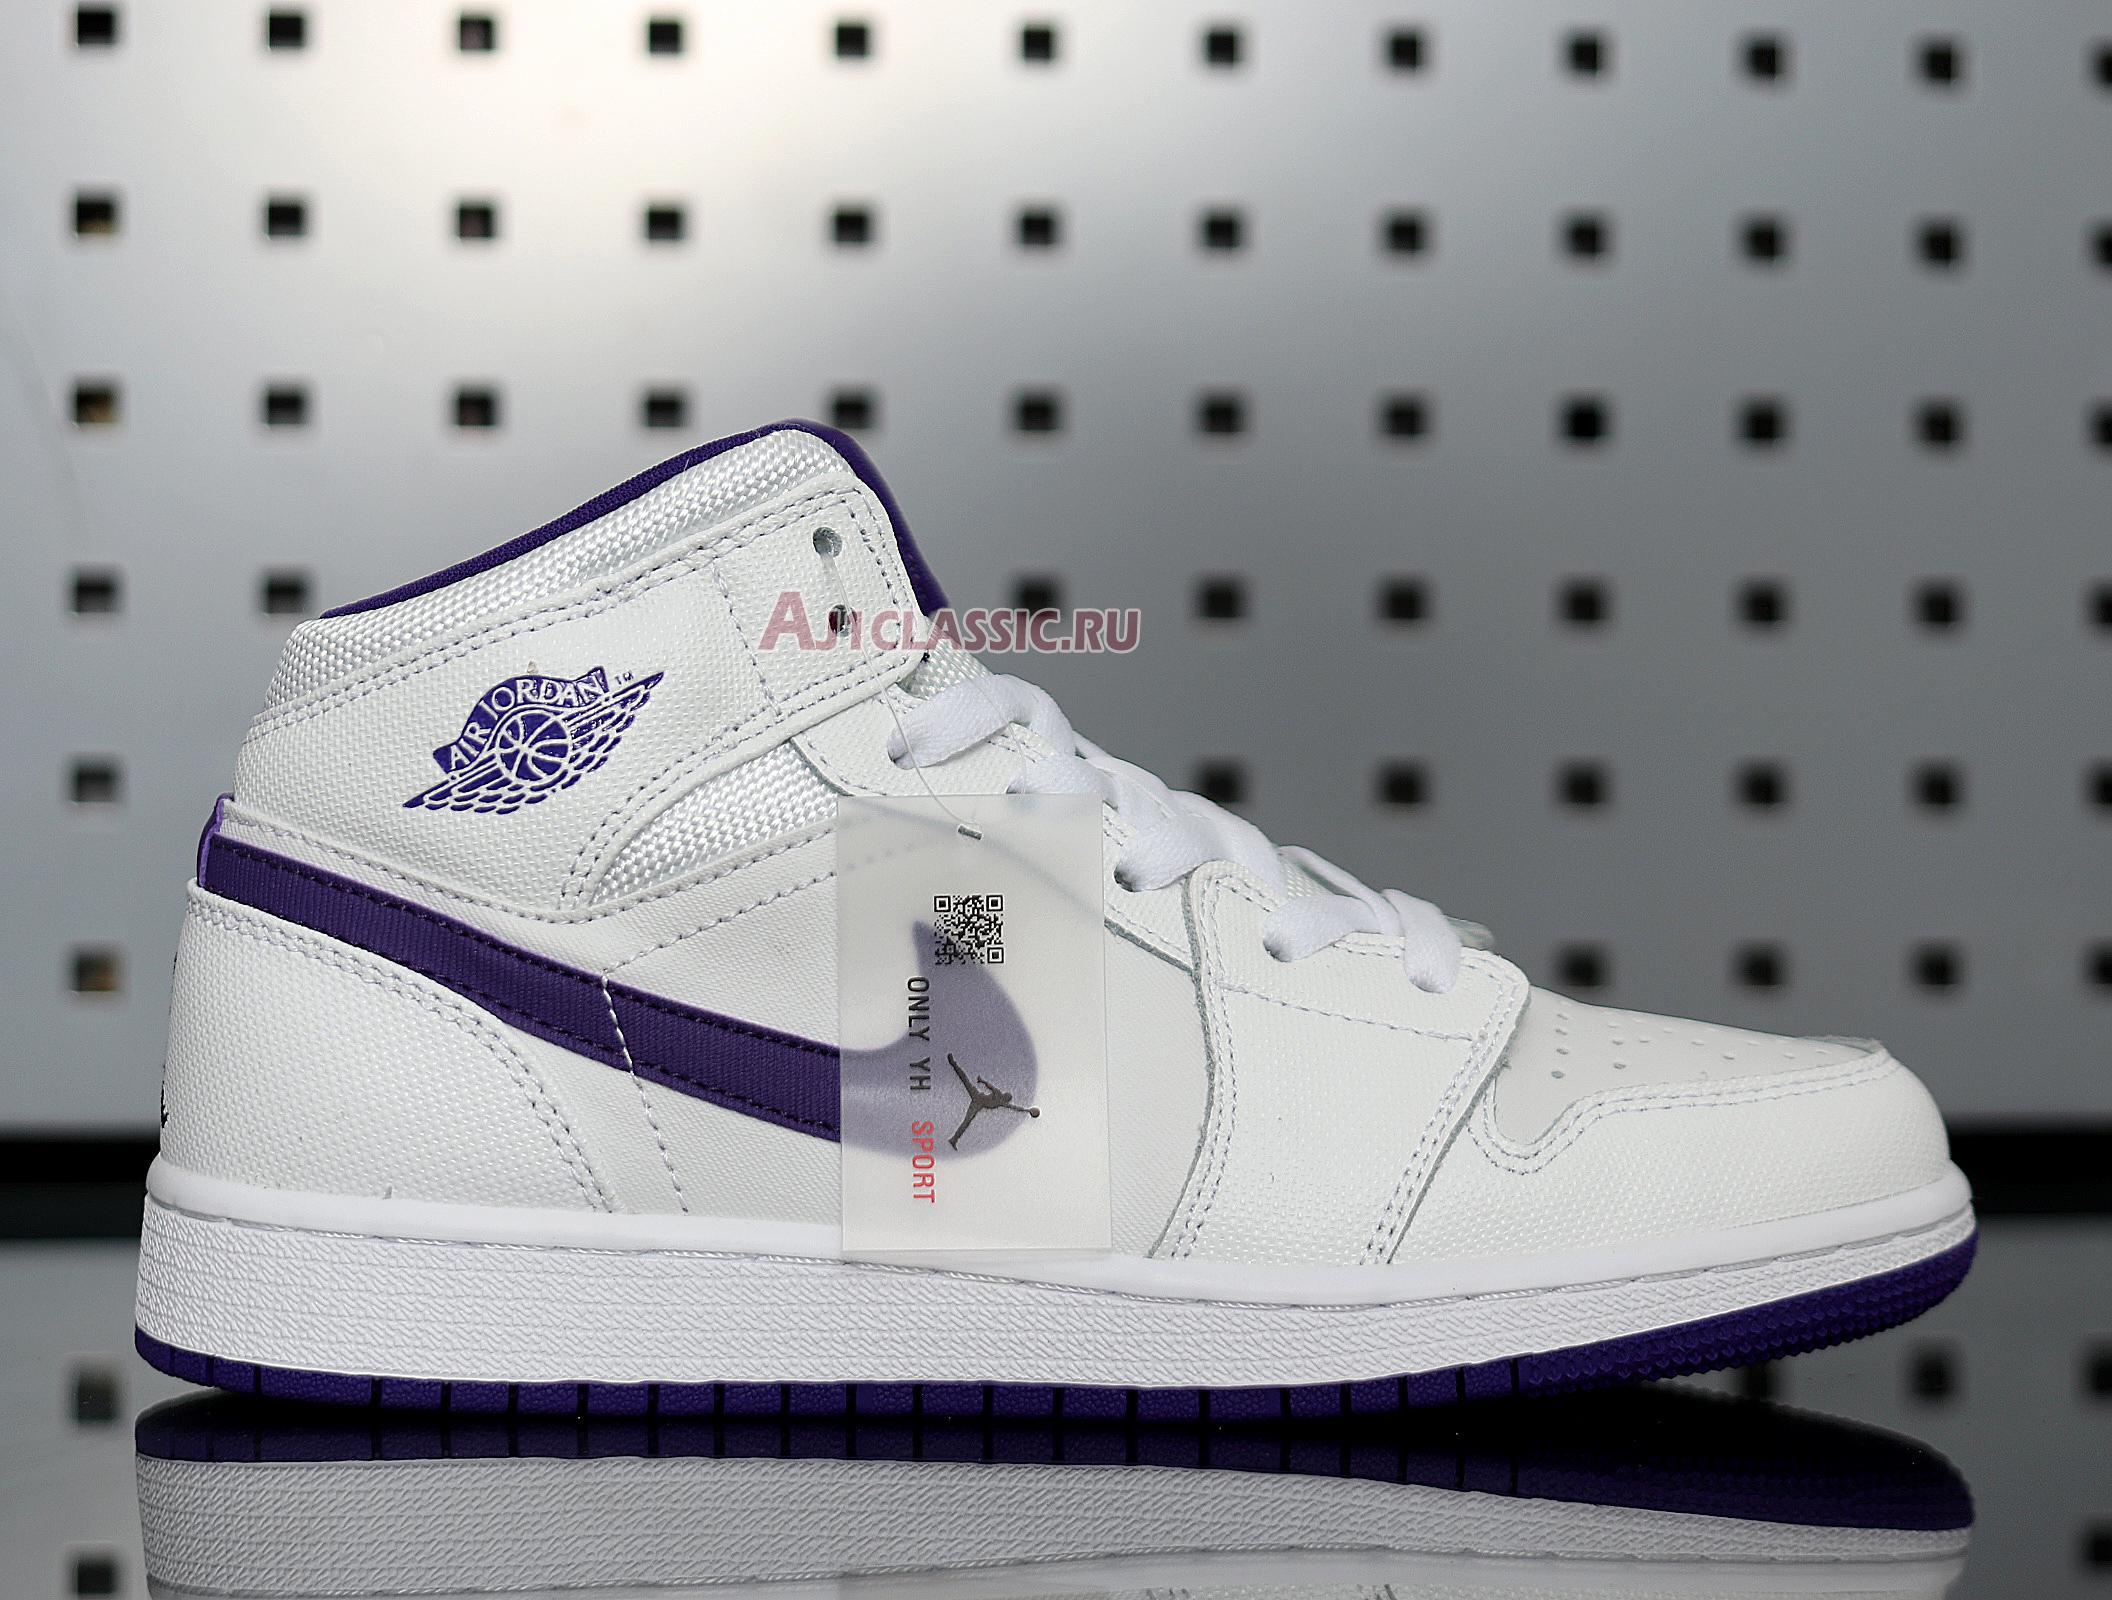 Air Jordan 1 Retro High White Court Purple 332148-137 White/Crt Purple-Lt Rtr-White Sneakers